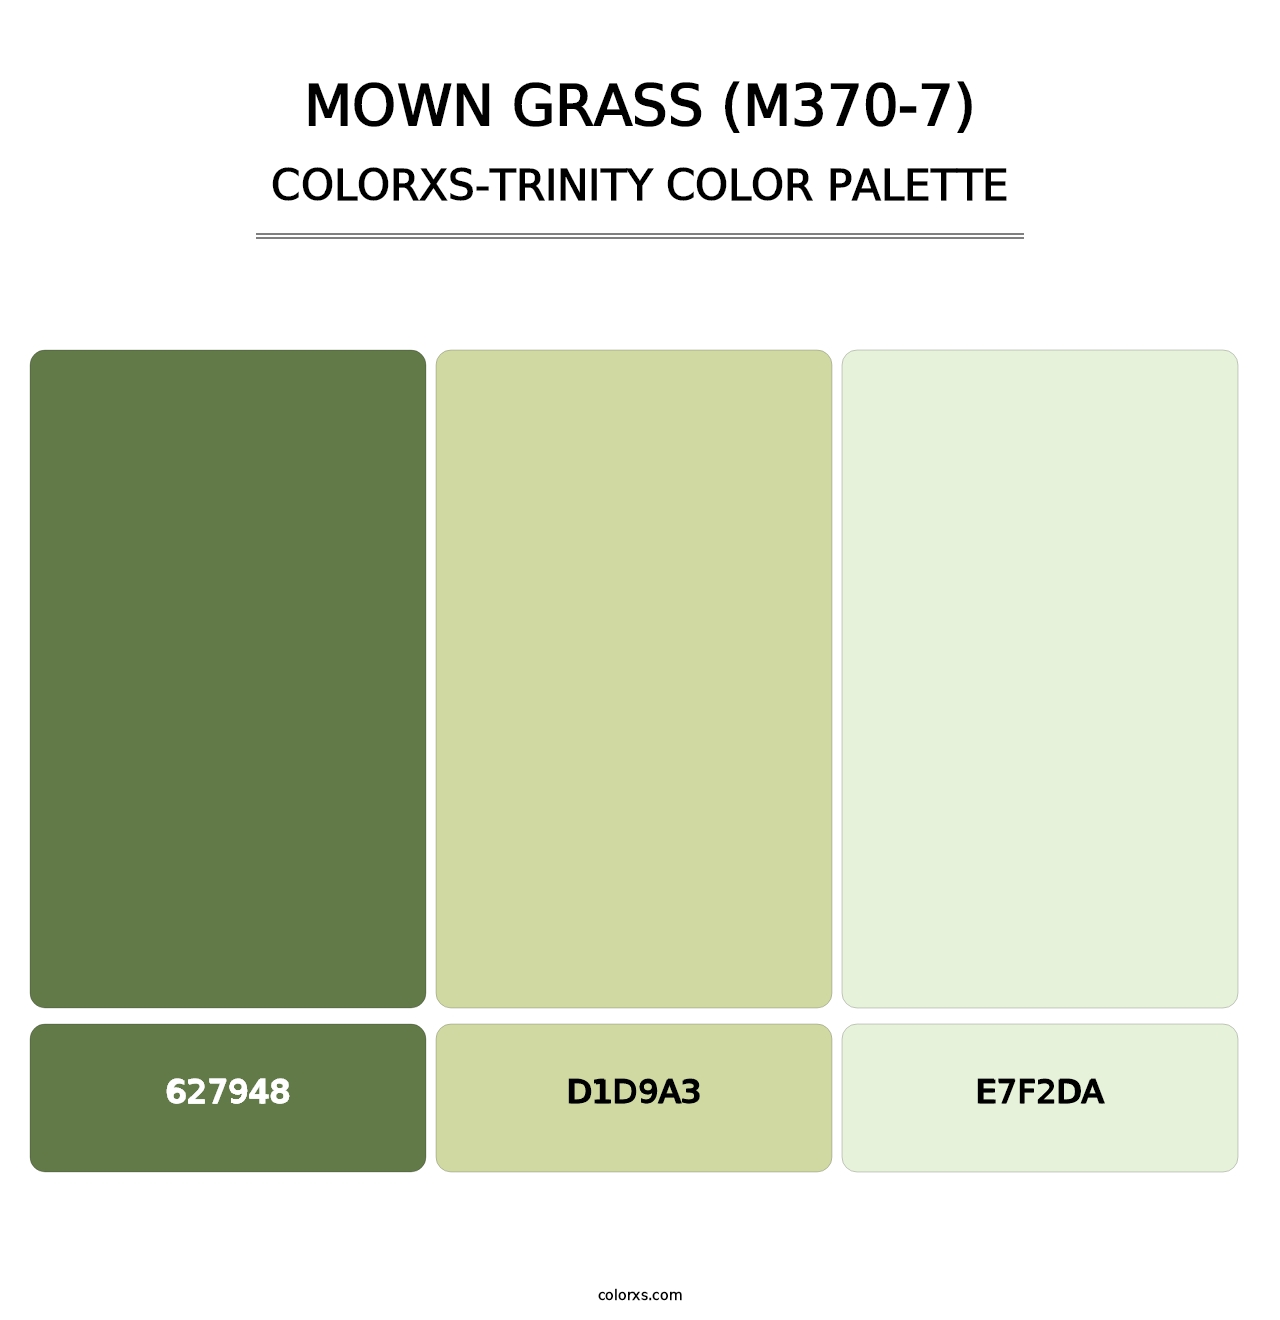 Mown Grass (M370-7) - Colorxs Trinity Palette